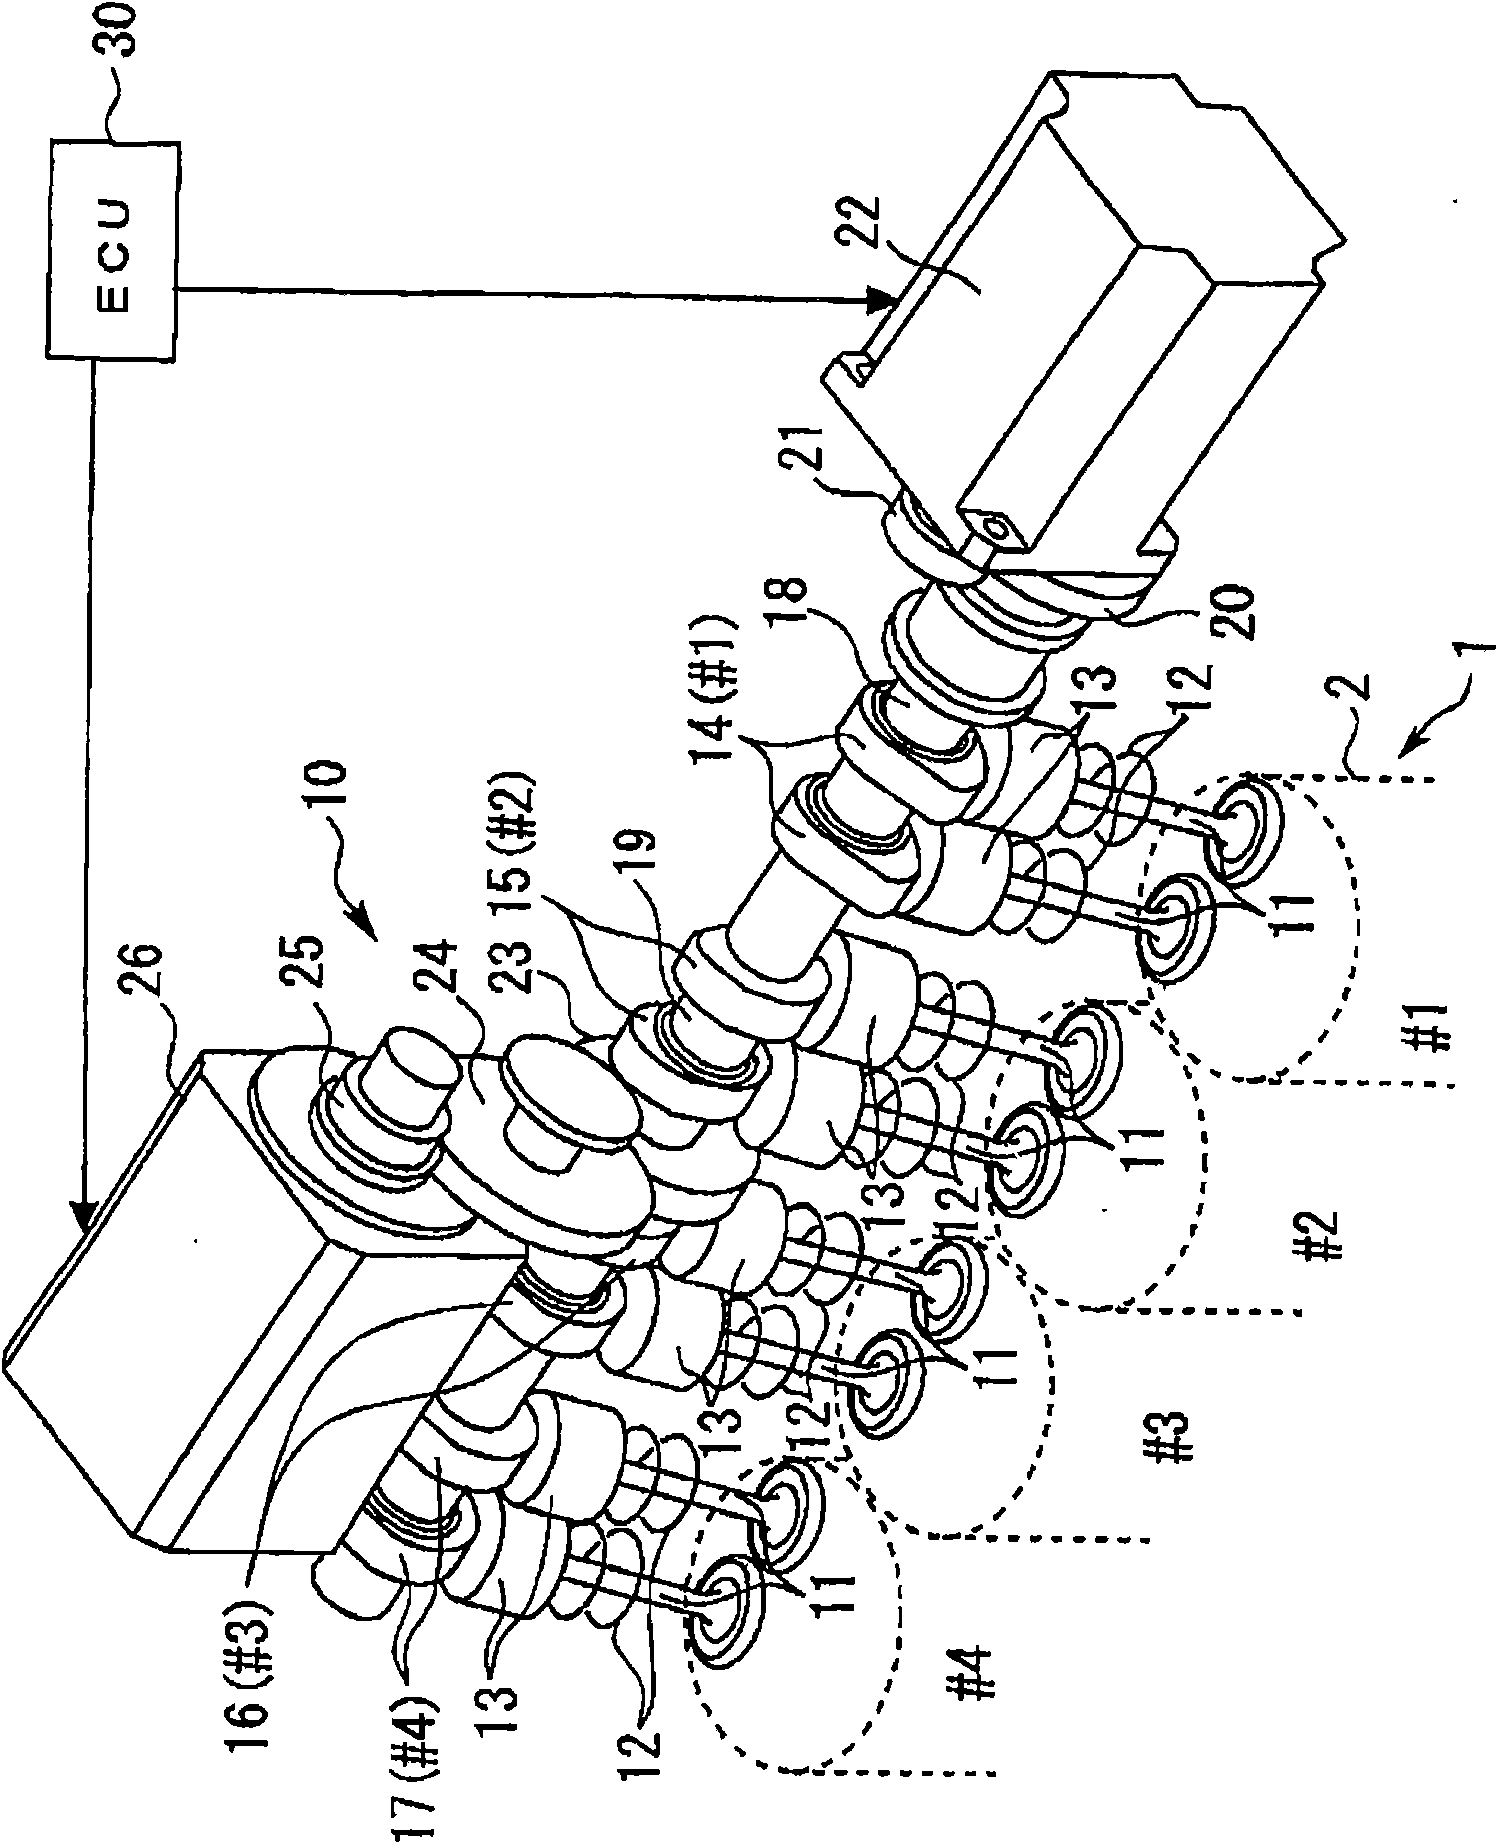 Controller of variable valve actuator